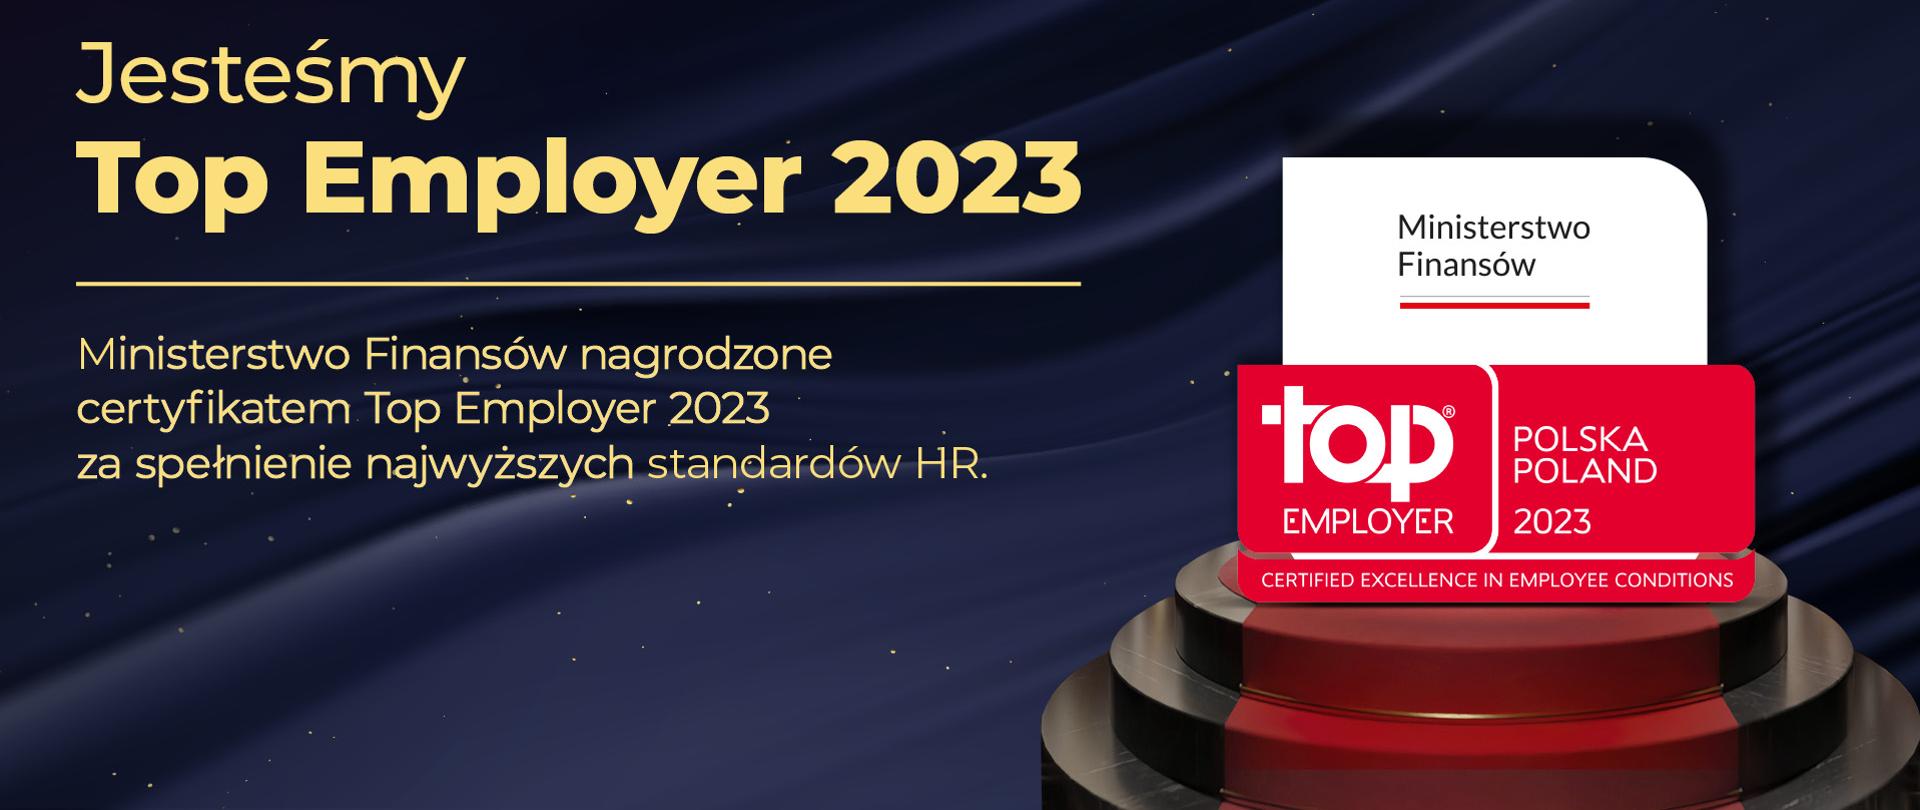 Top Employer 2023